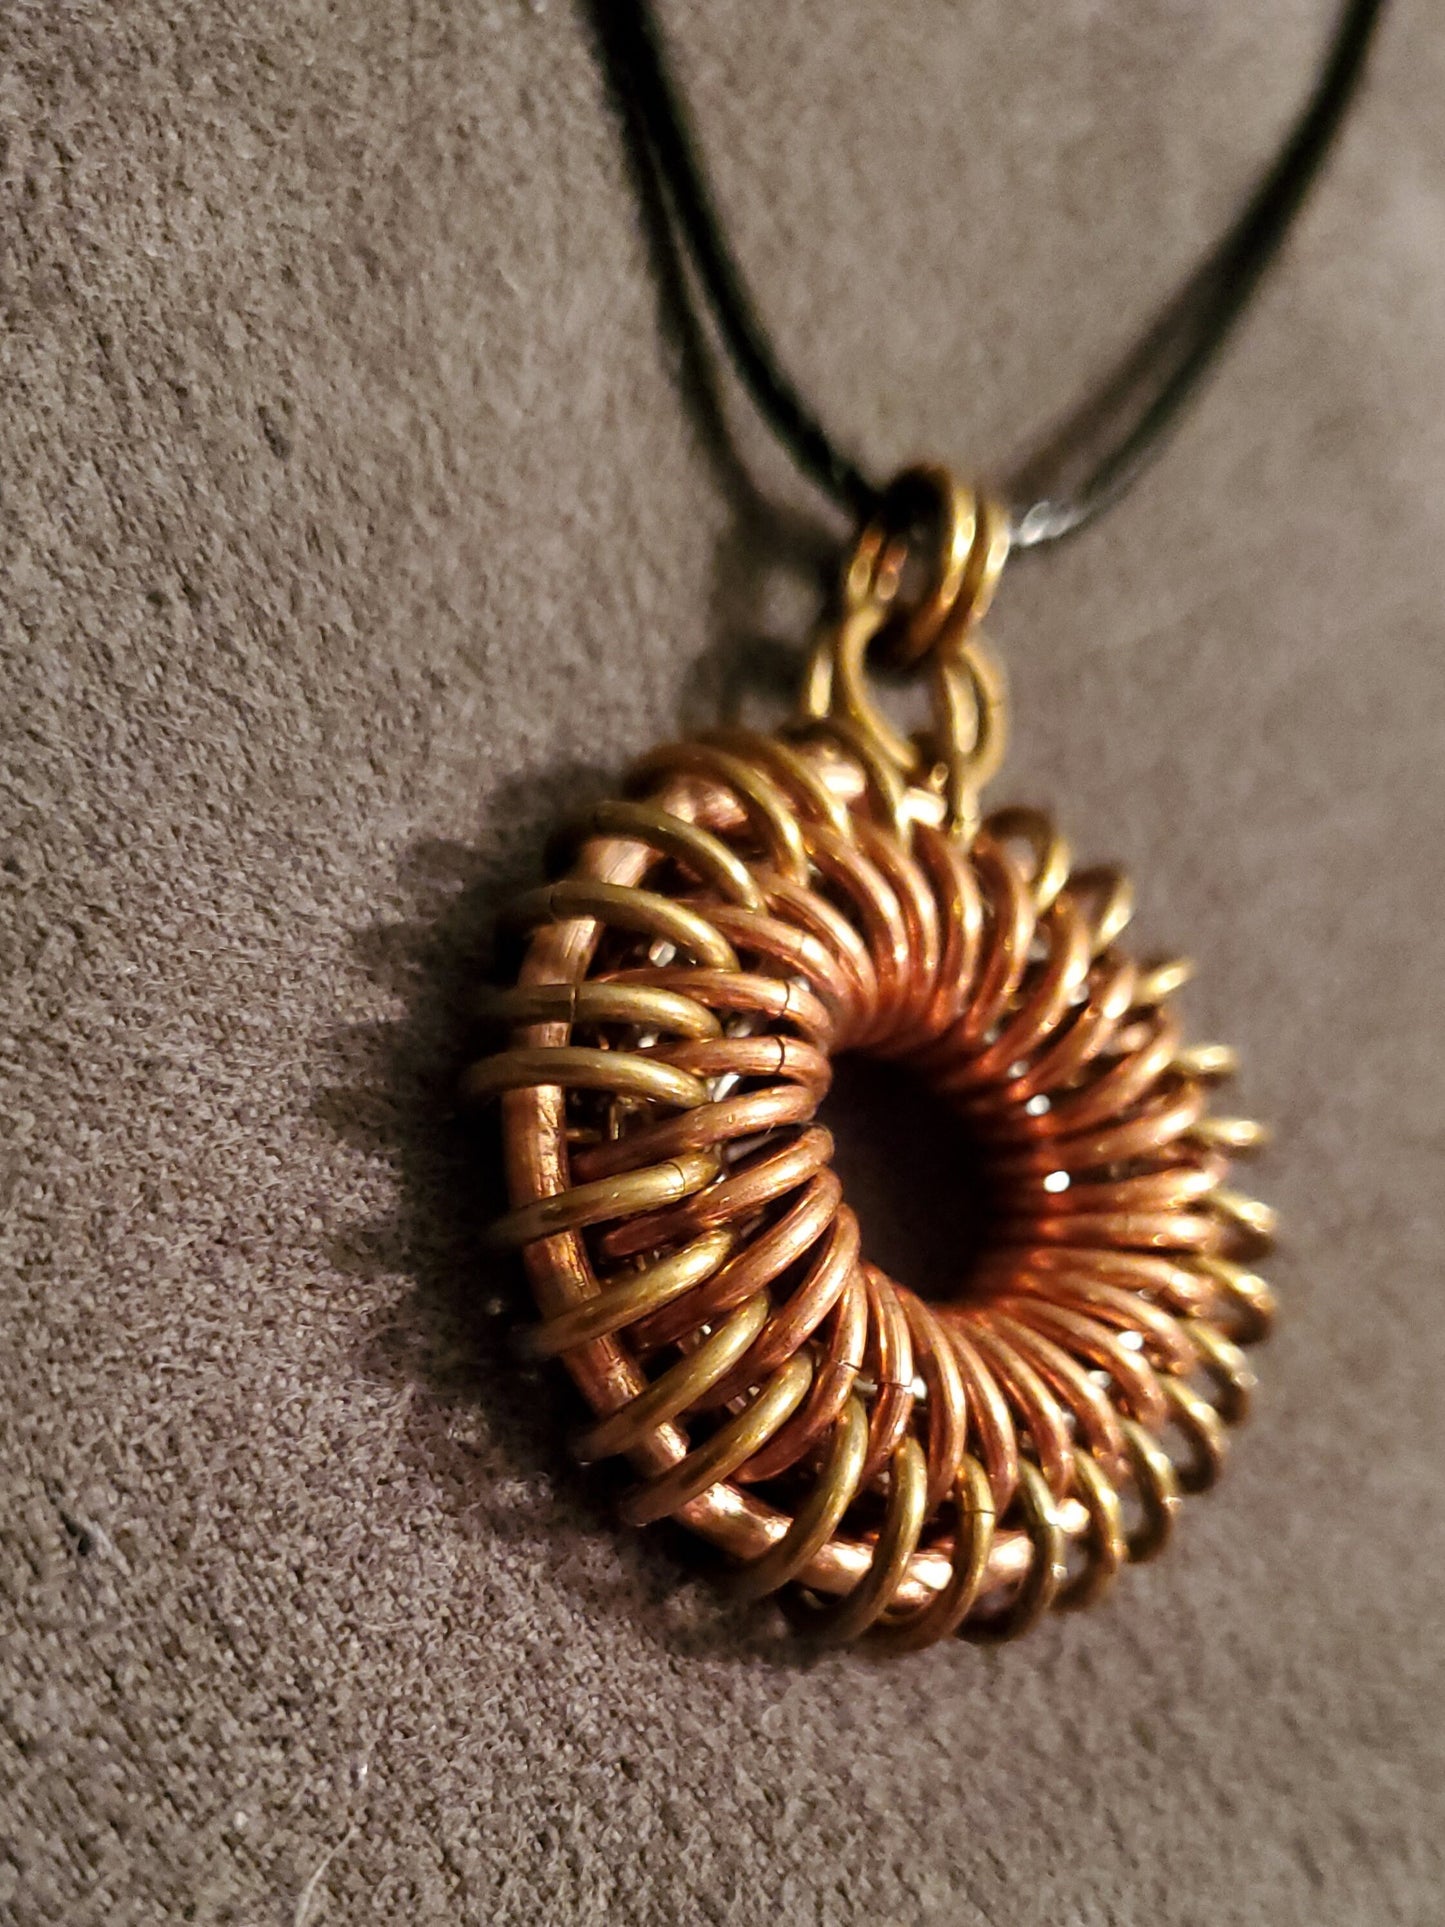 Copper Sunflower Pendant